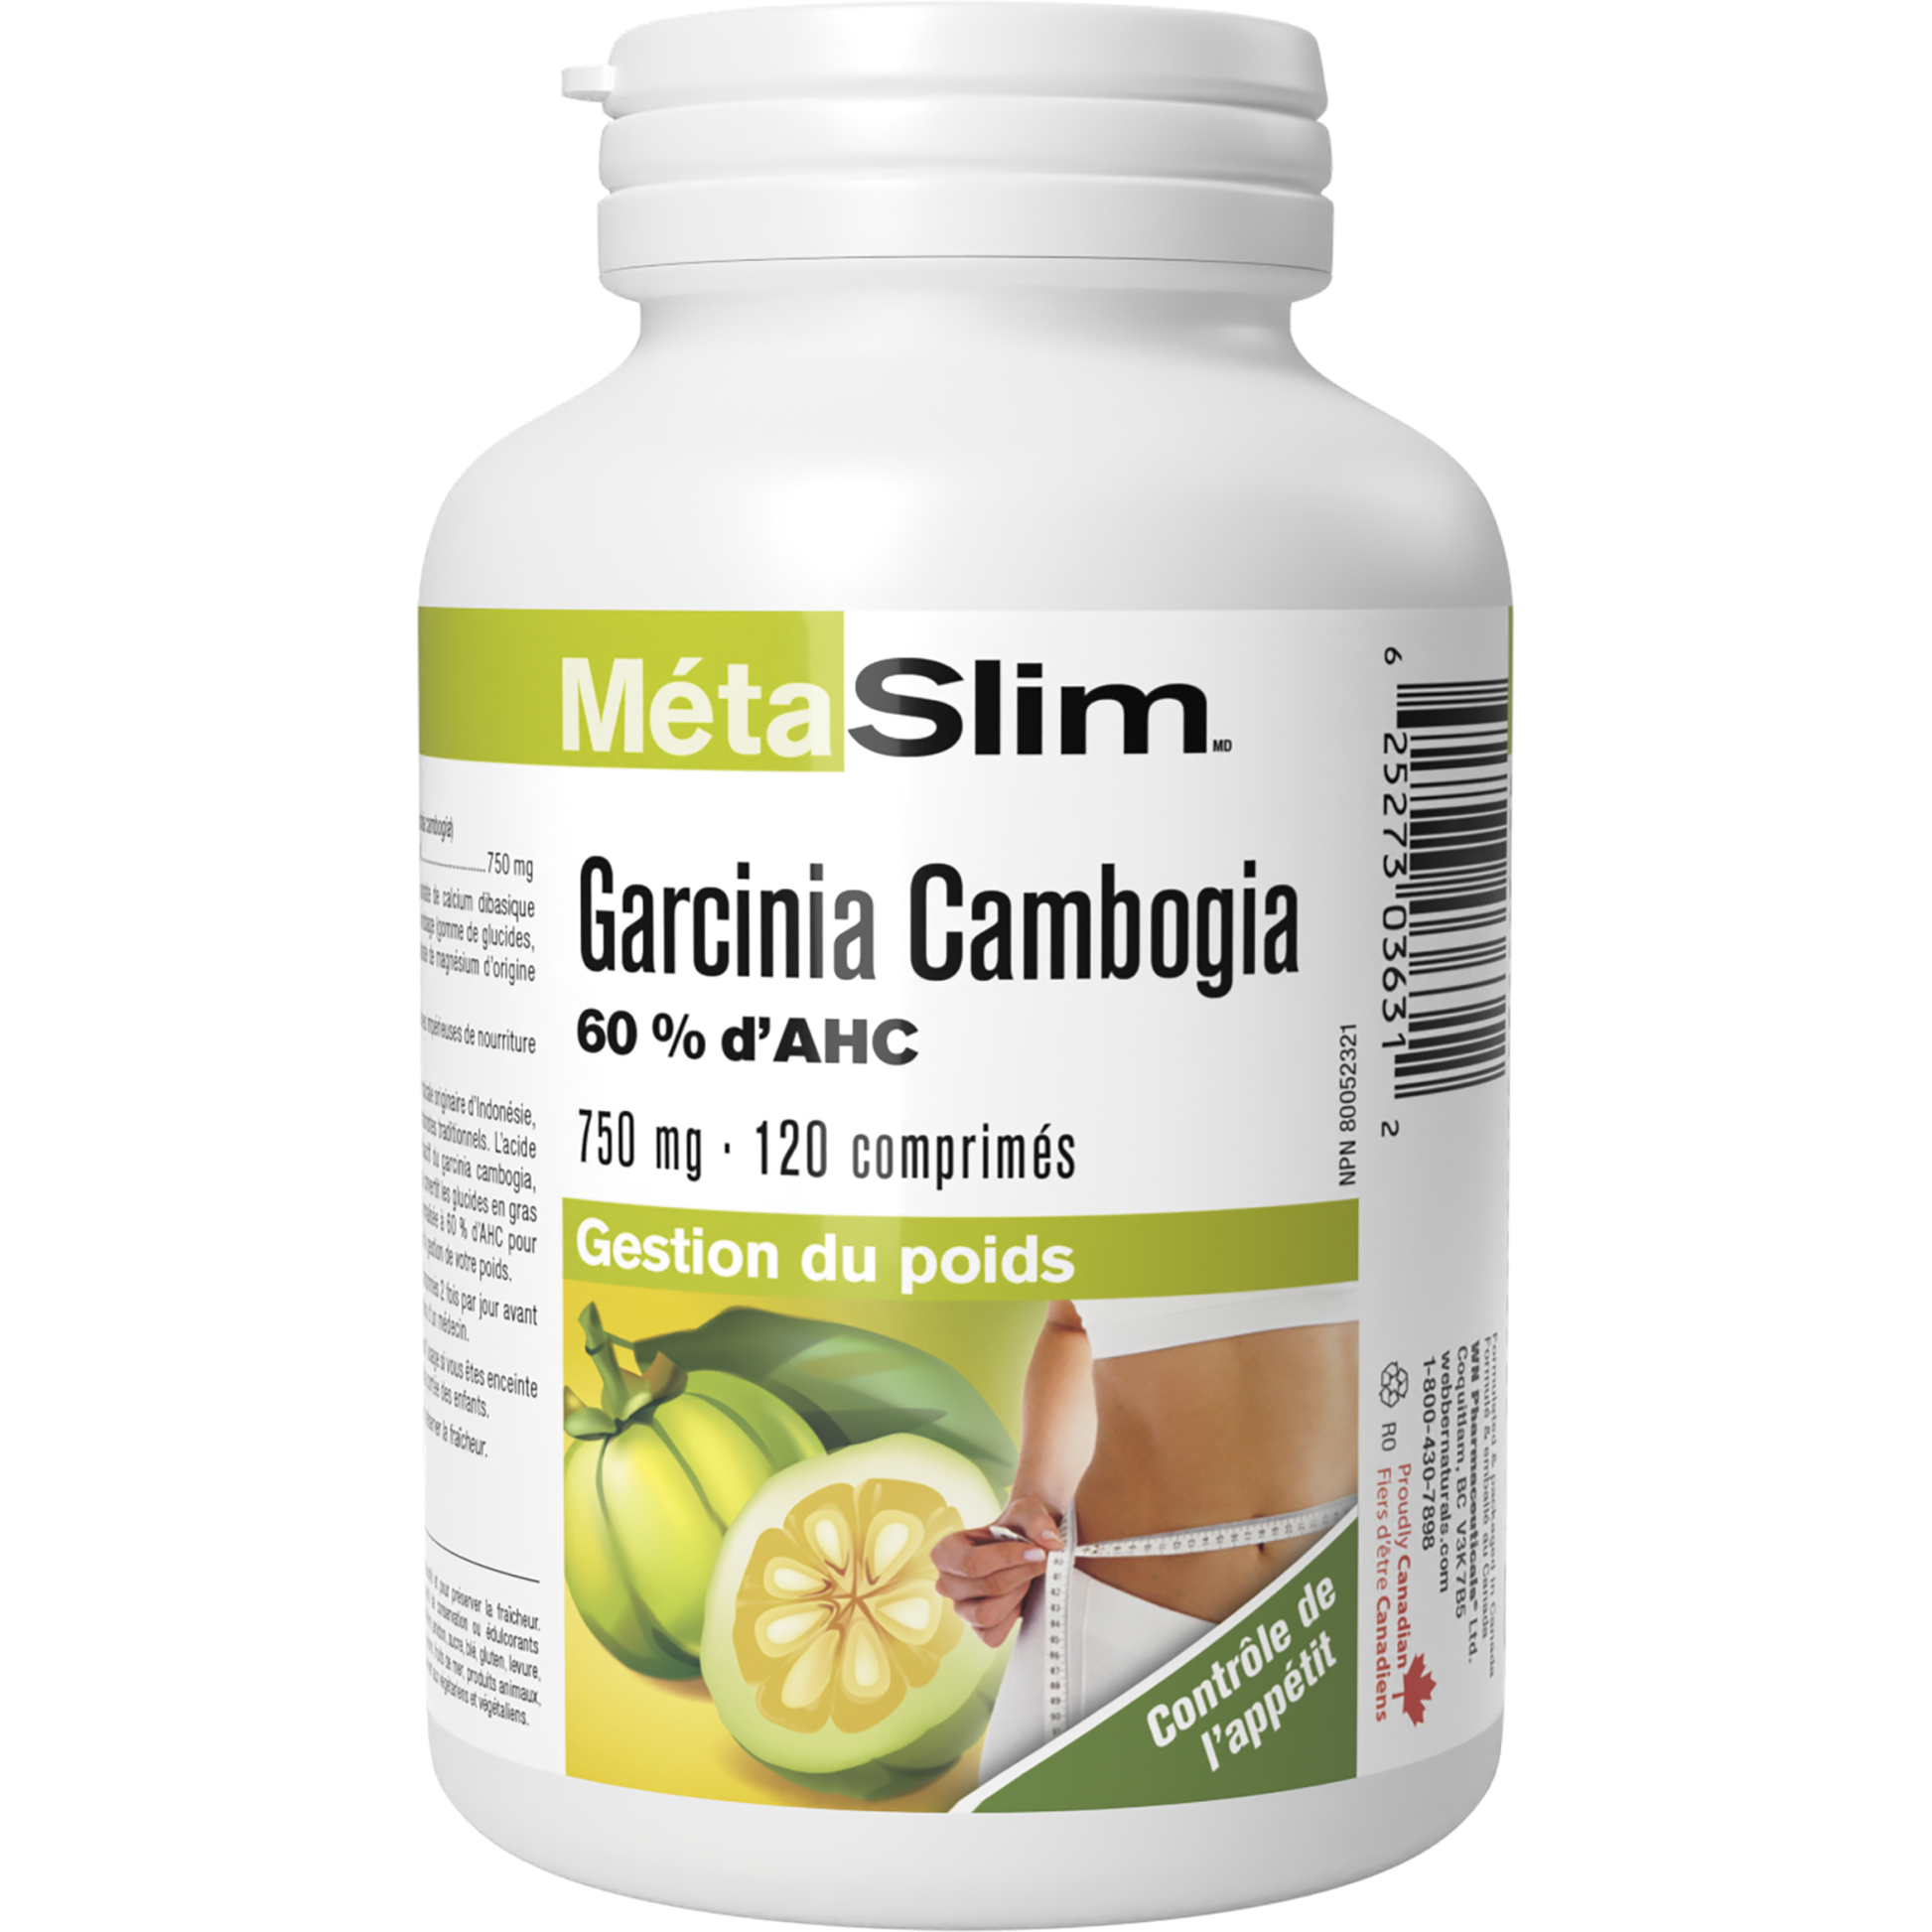 Garcinia Cambogia 60 % d'AHC 750 mg for MetaSlim®|v|hi-res|WN3631